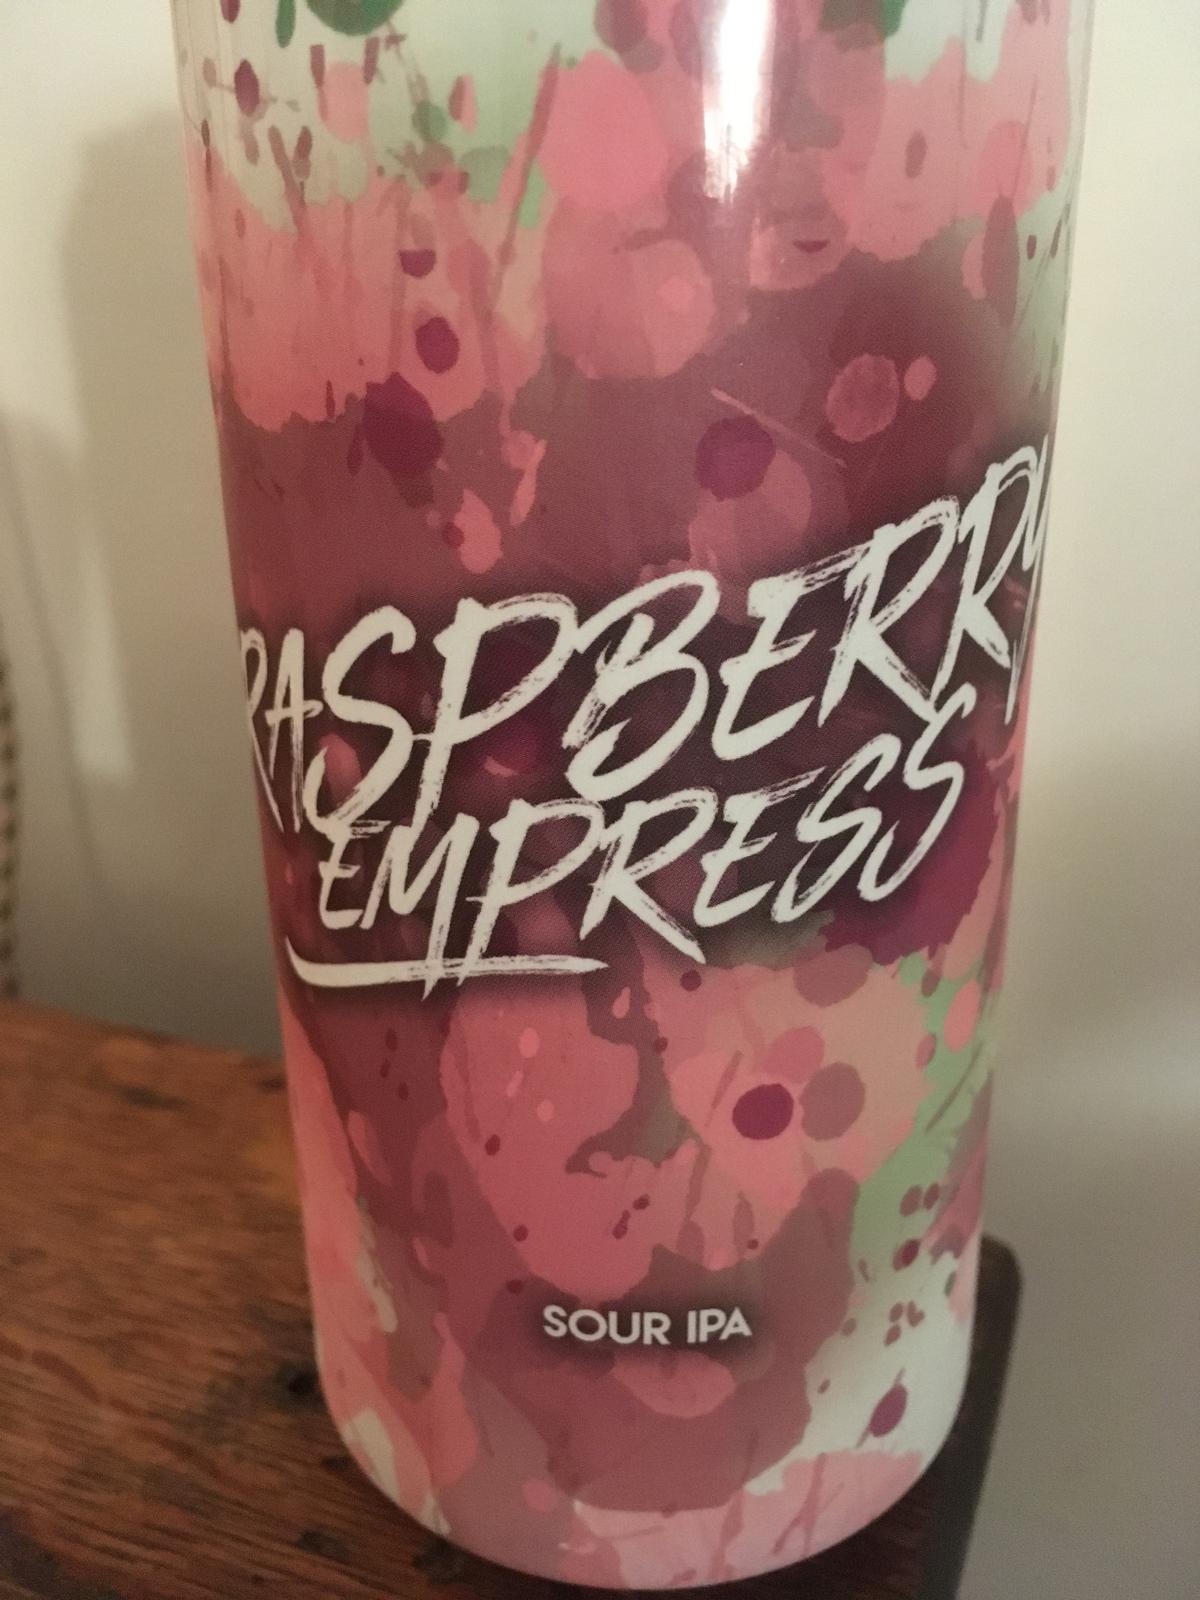 Raspberry Empress Saux IPA